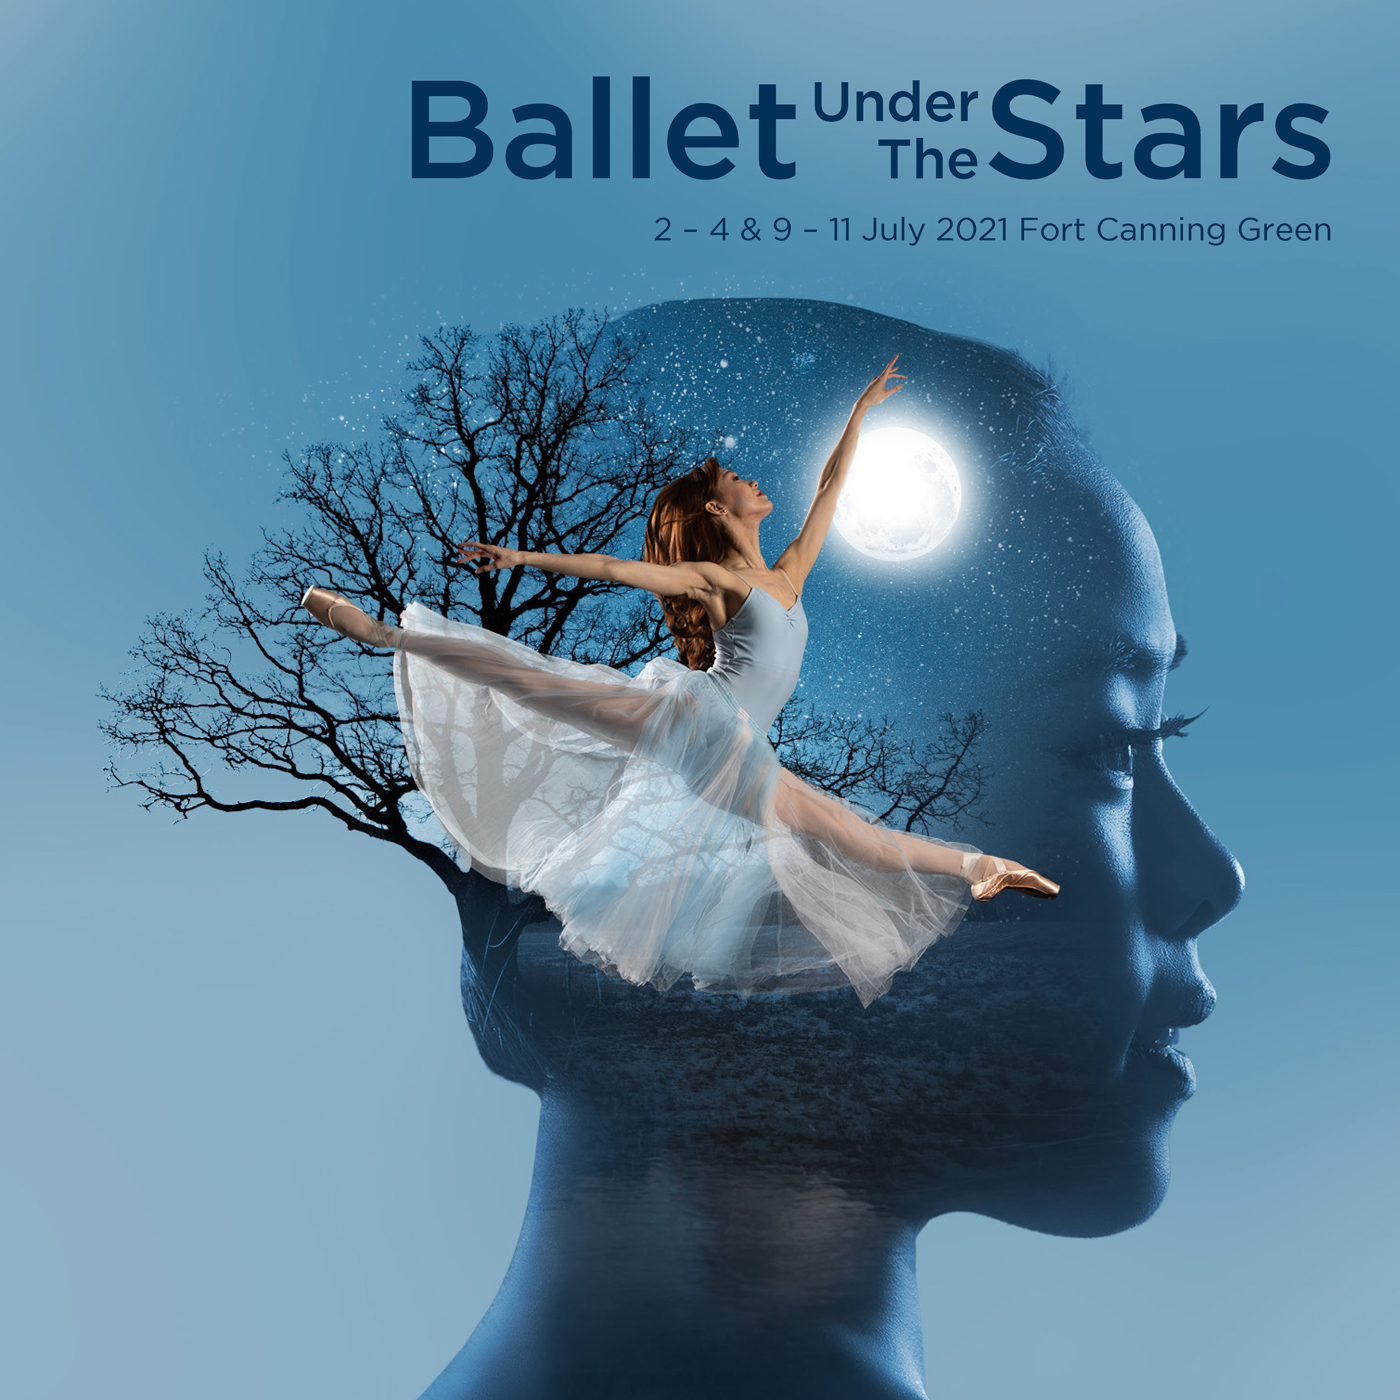 Ballet Under the Stars 2021 Singapore Ballet